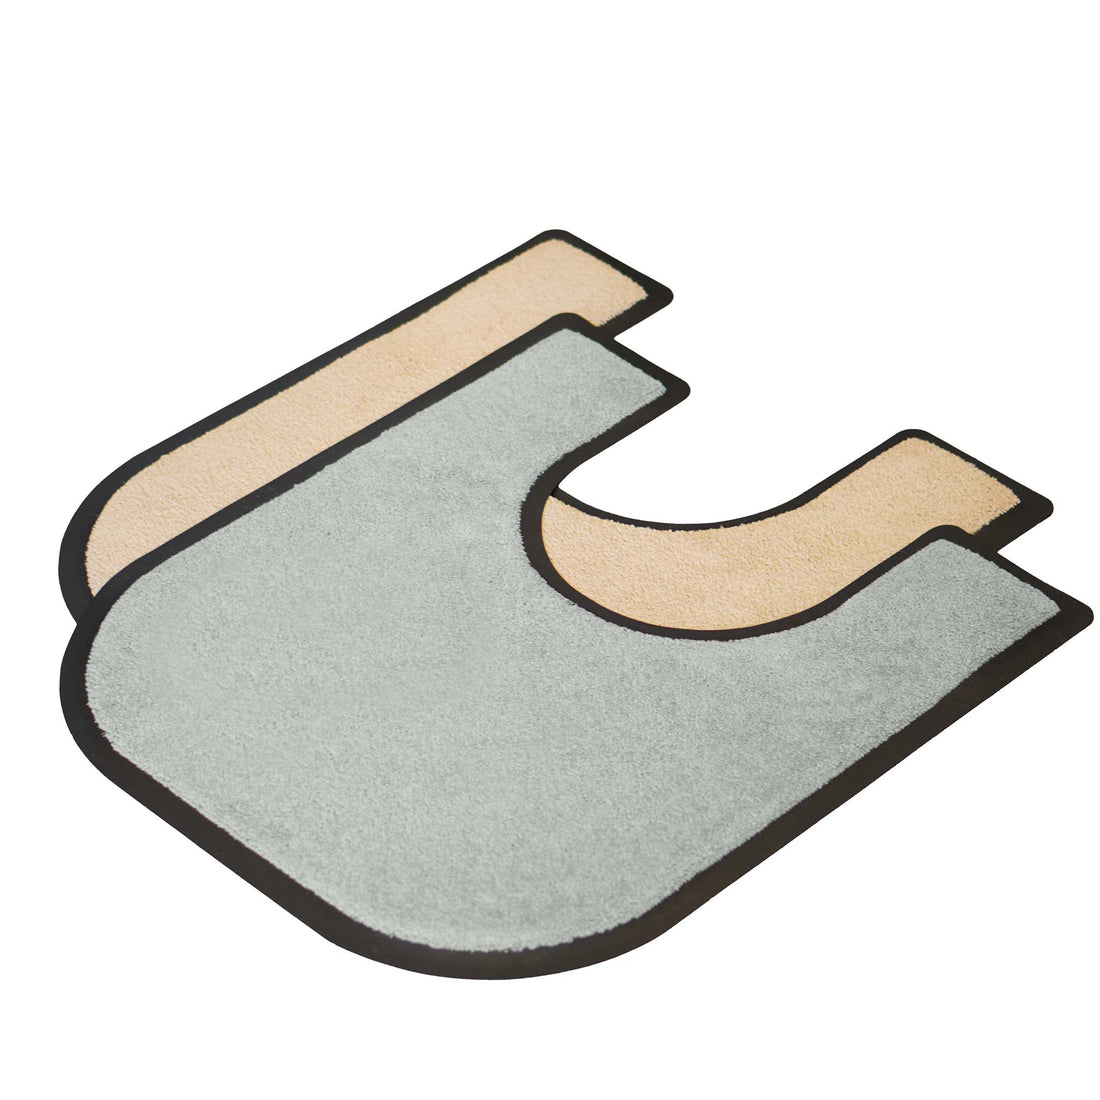 Betterliving beige and dove grey non-slip toilet mats